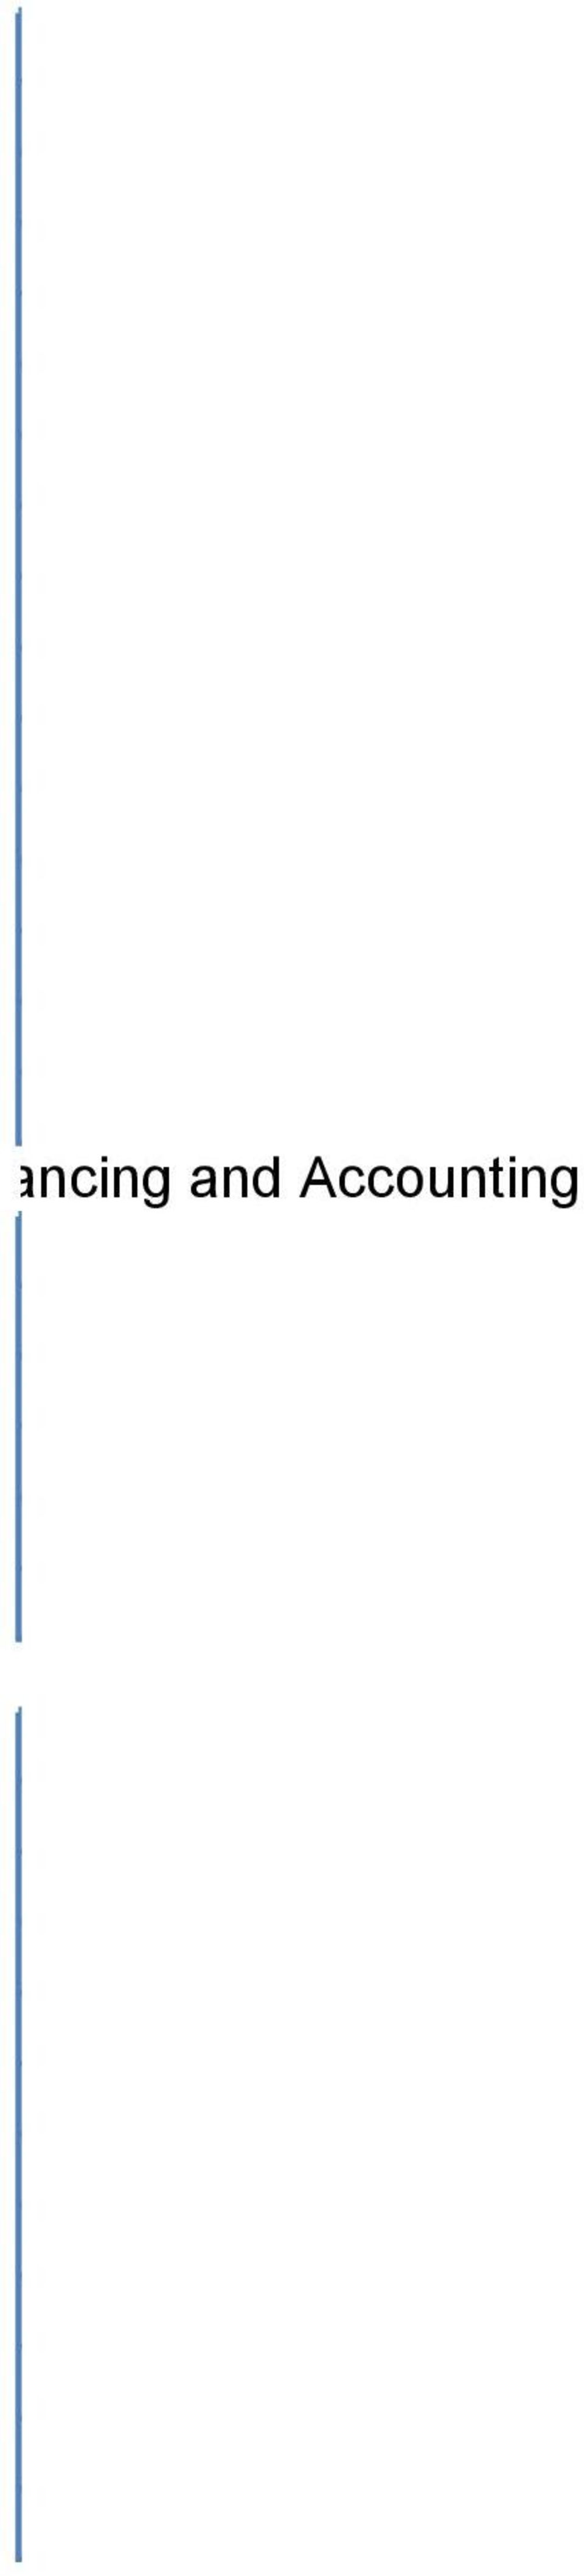 Financing and Accounting